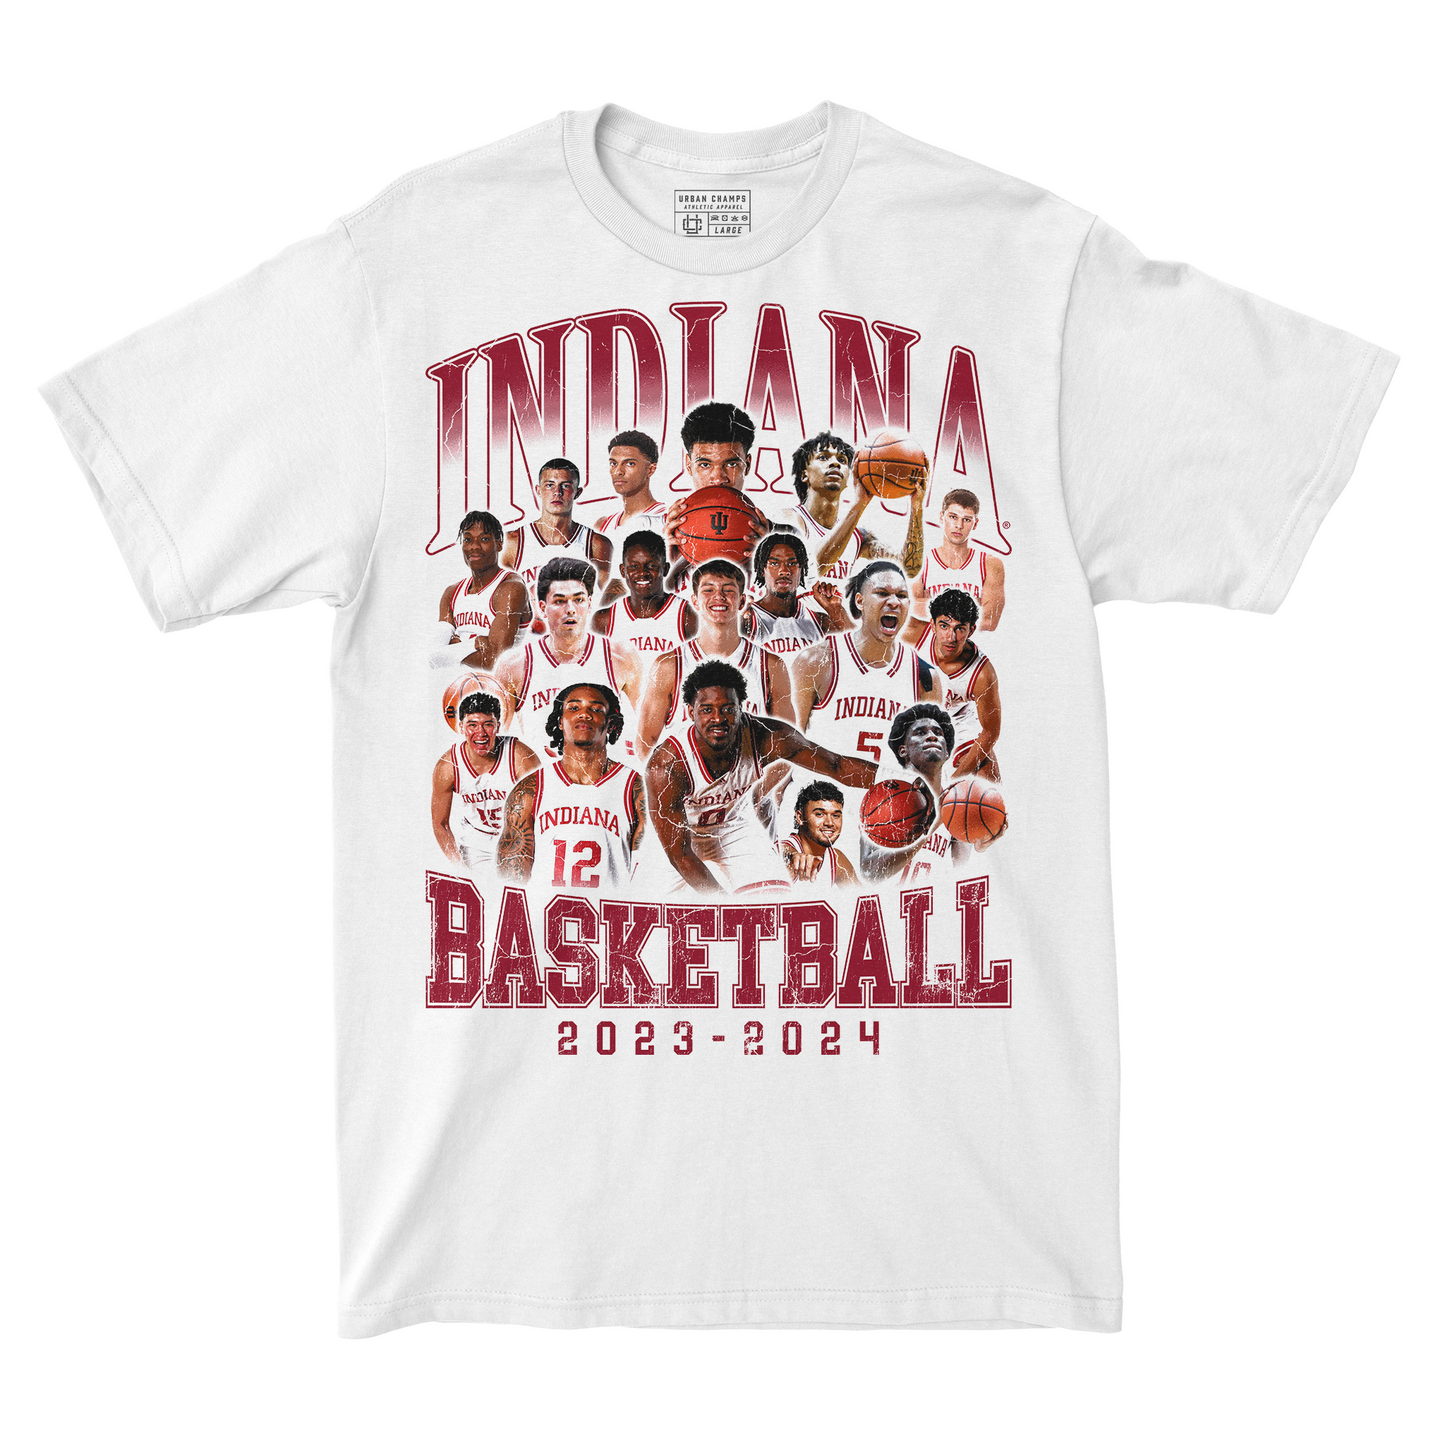 EXCLUSIVE DROP: Indiana Men's Basketball Team T-Shirt